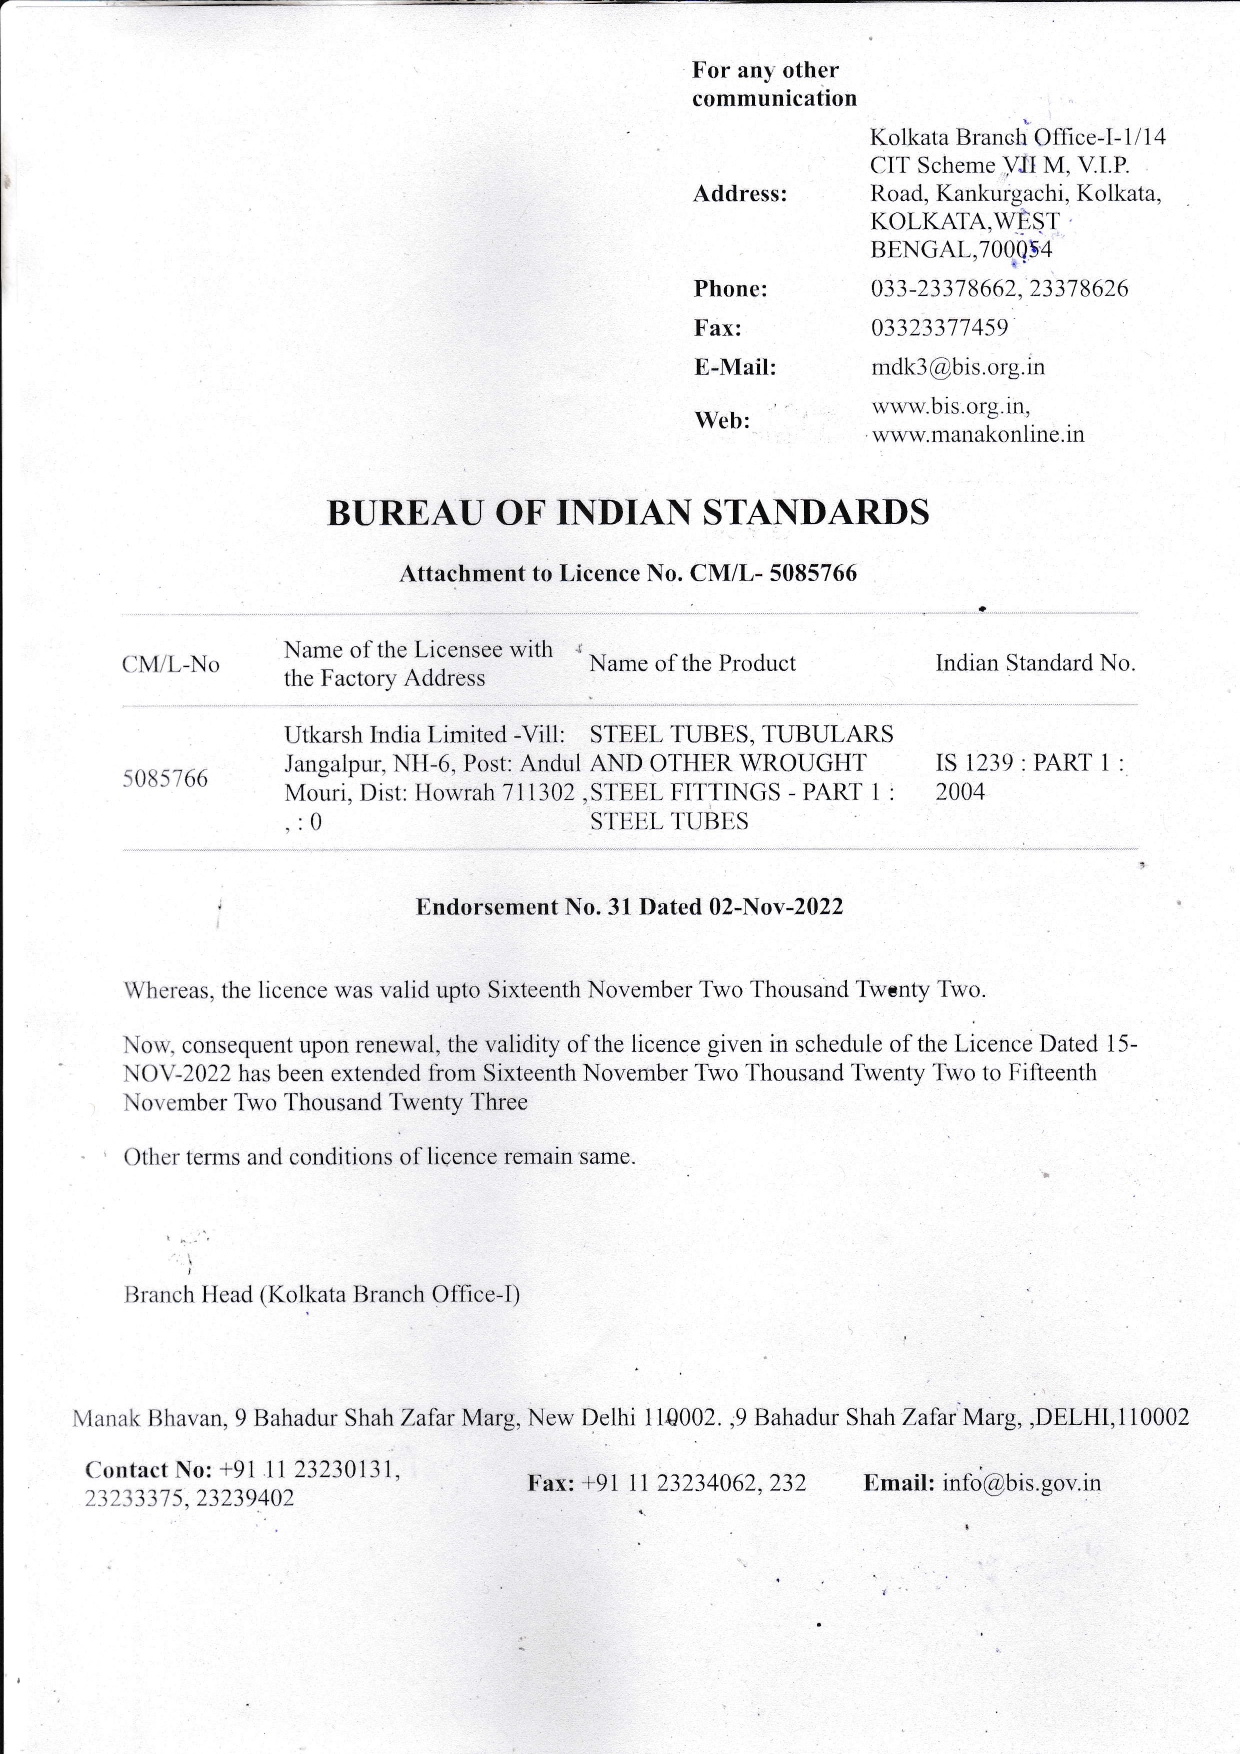 Bureau of Indian Standards IS 1239  PART 1 2004